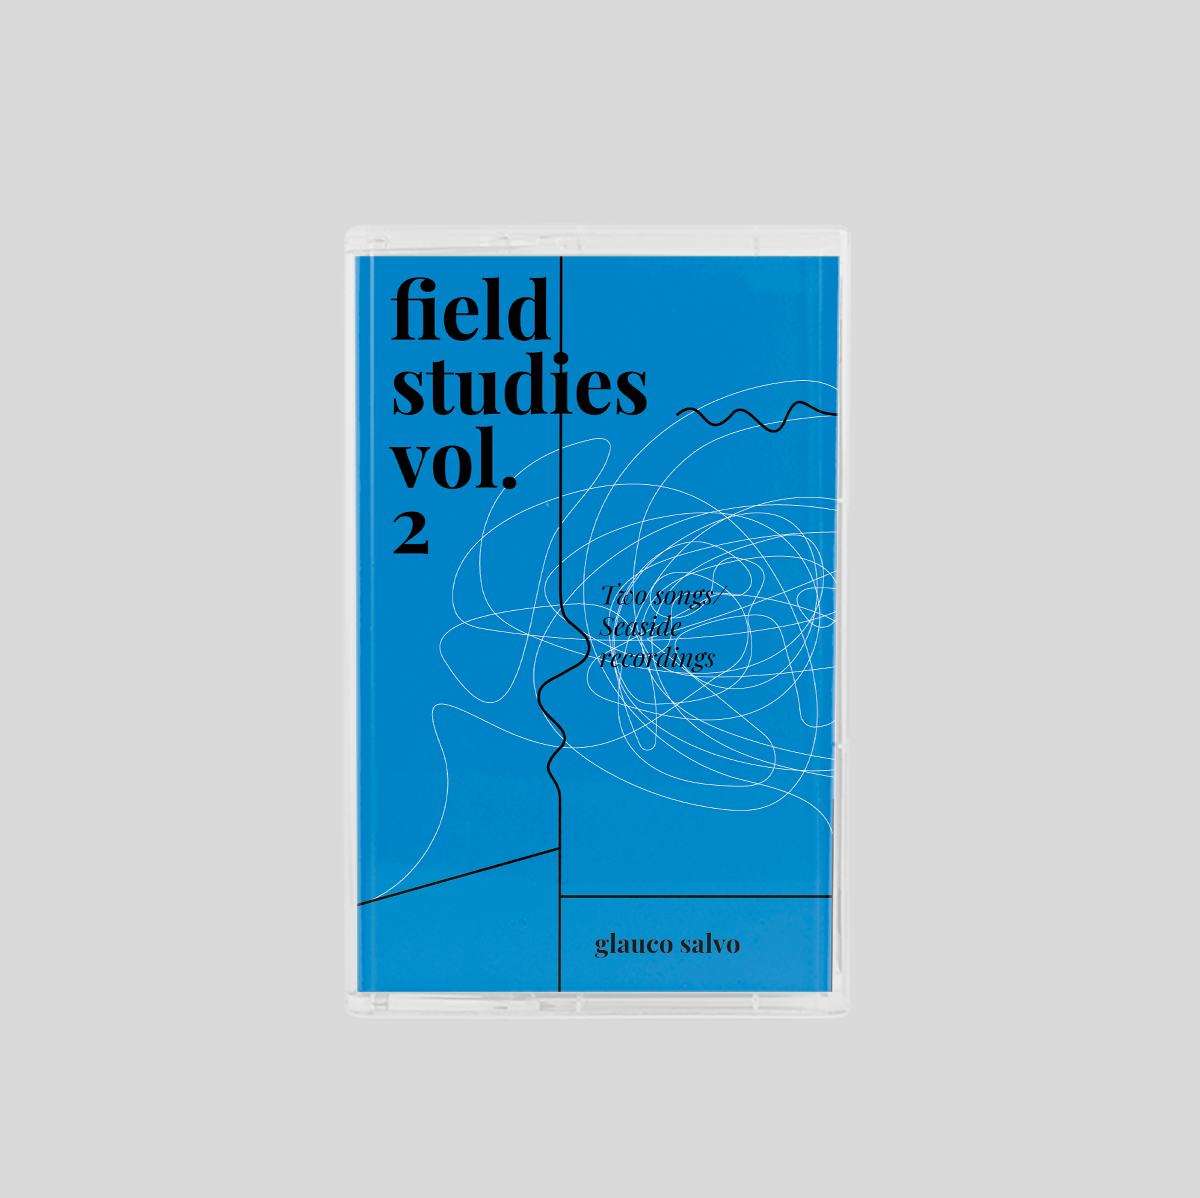 field studies vol.2 cassette's cover